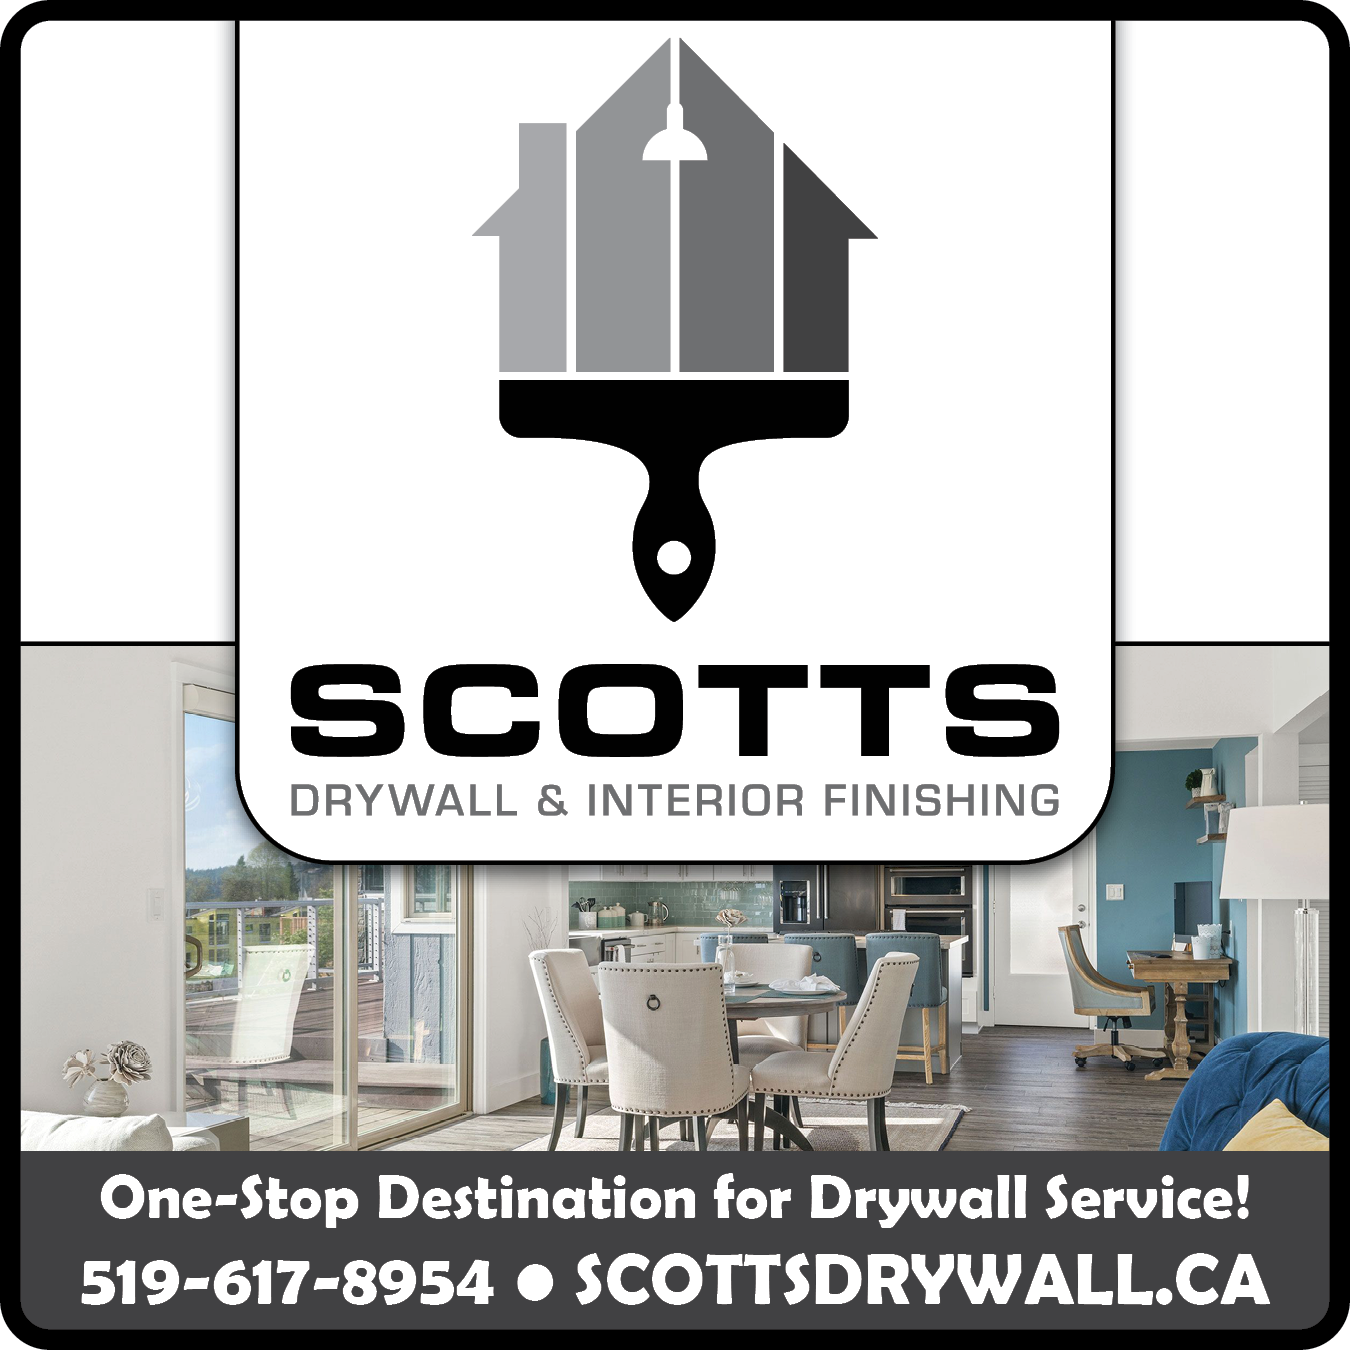 Scott's Drywall & Interior Finishing